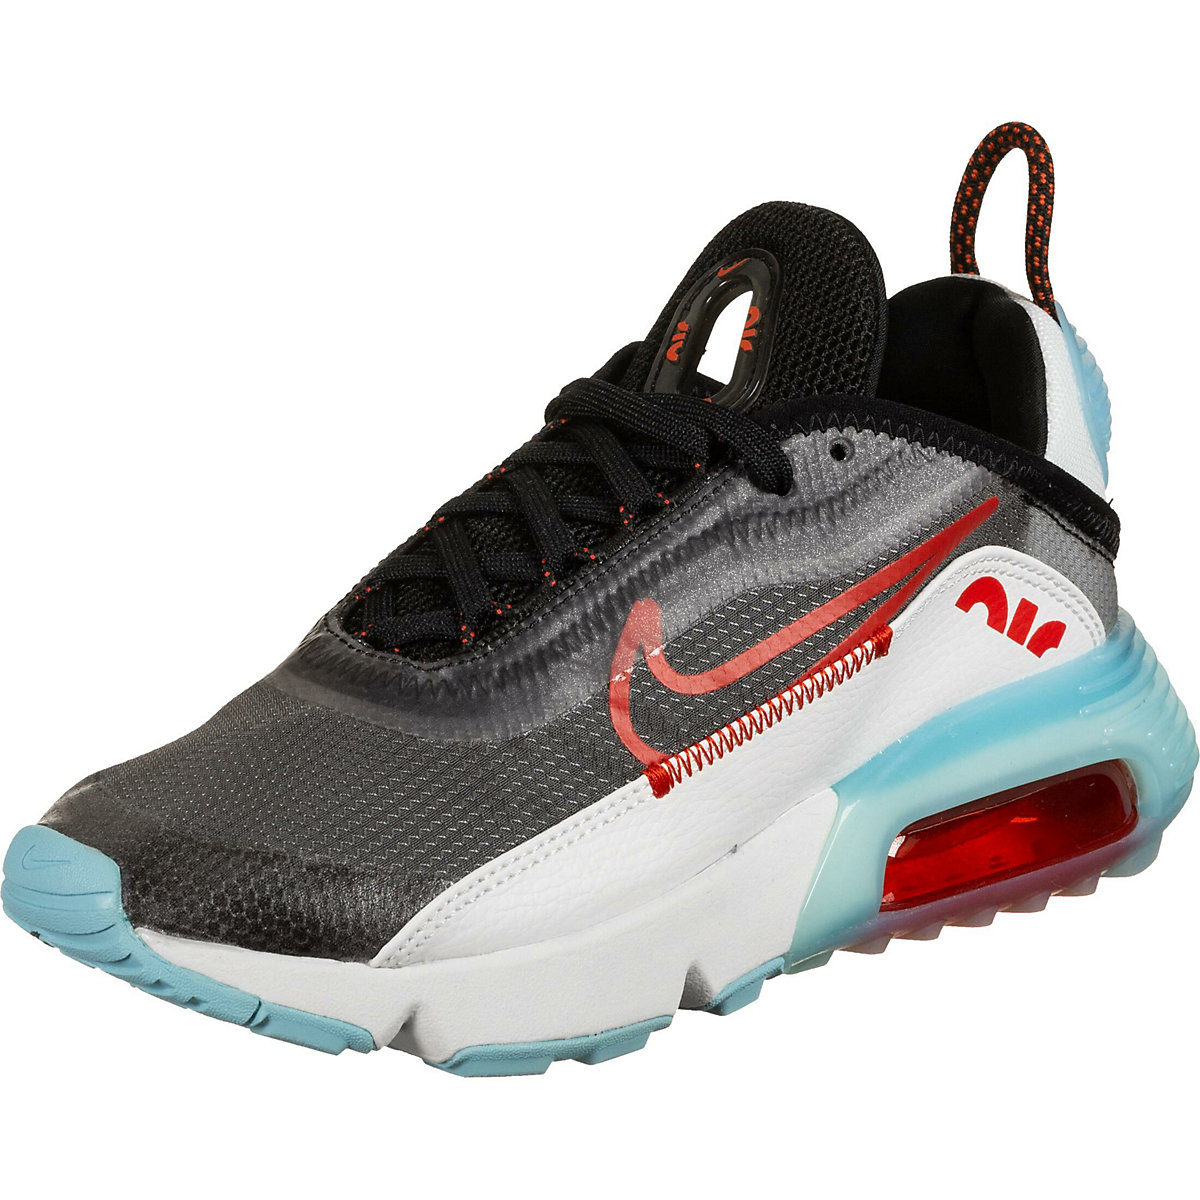 NIKE Nike Schuhe Air Max 2090 Sneakers Low schwarz/weiß